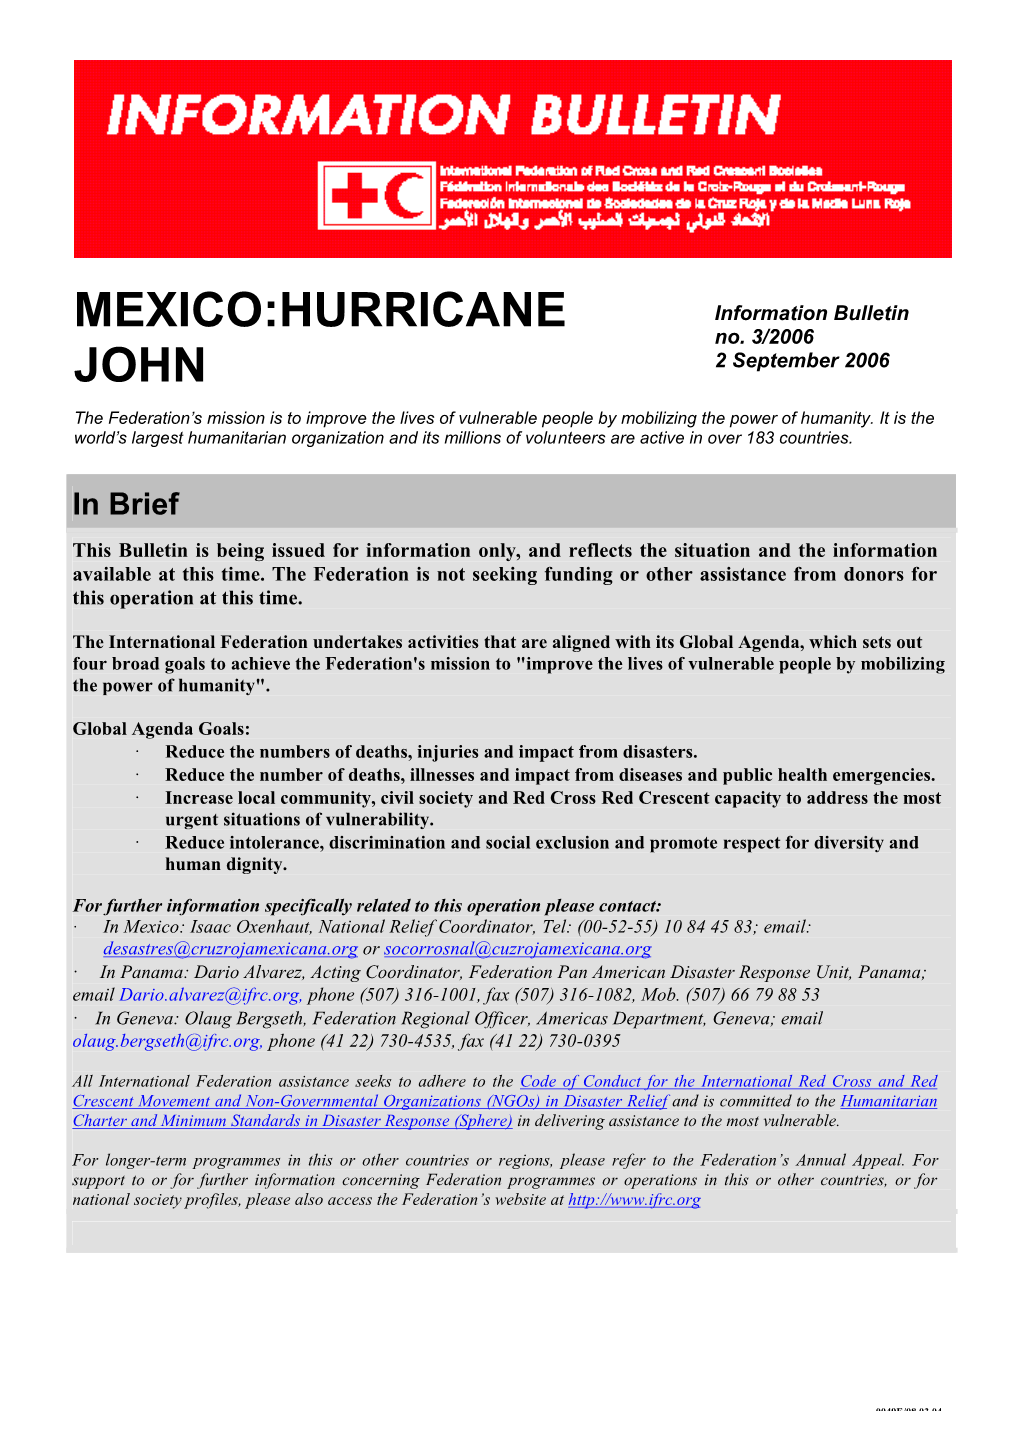 Mexico:Hurricane John